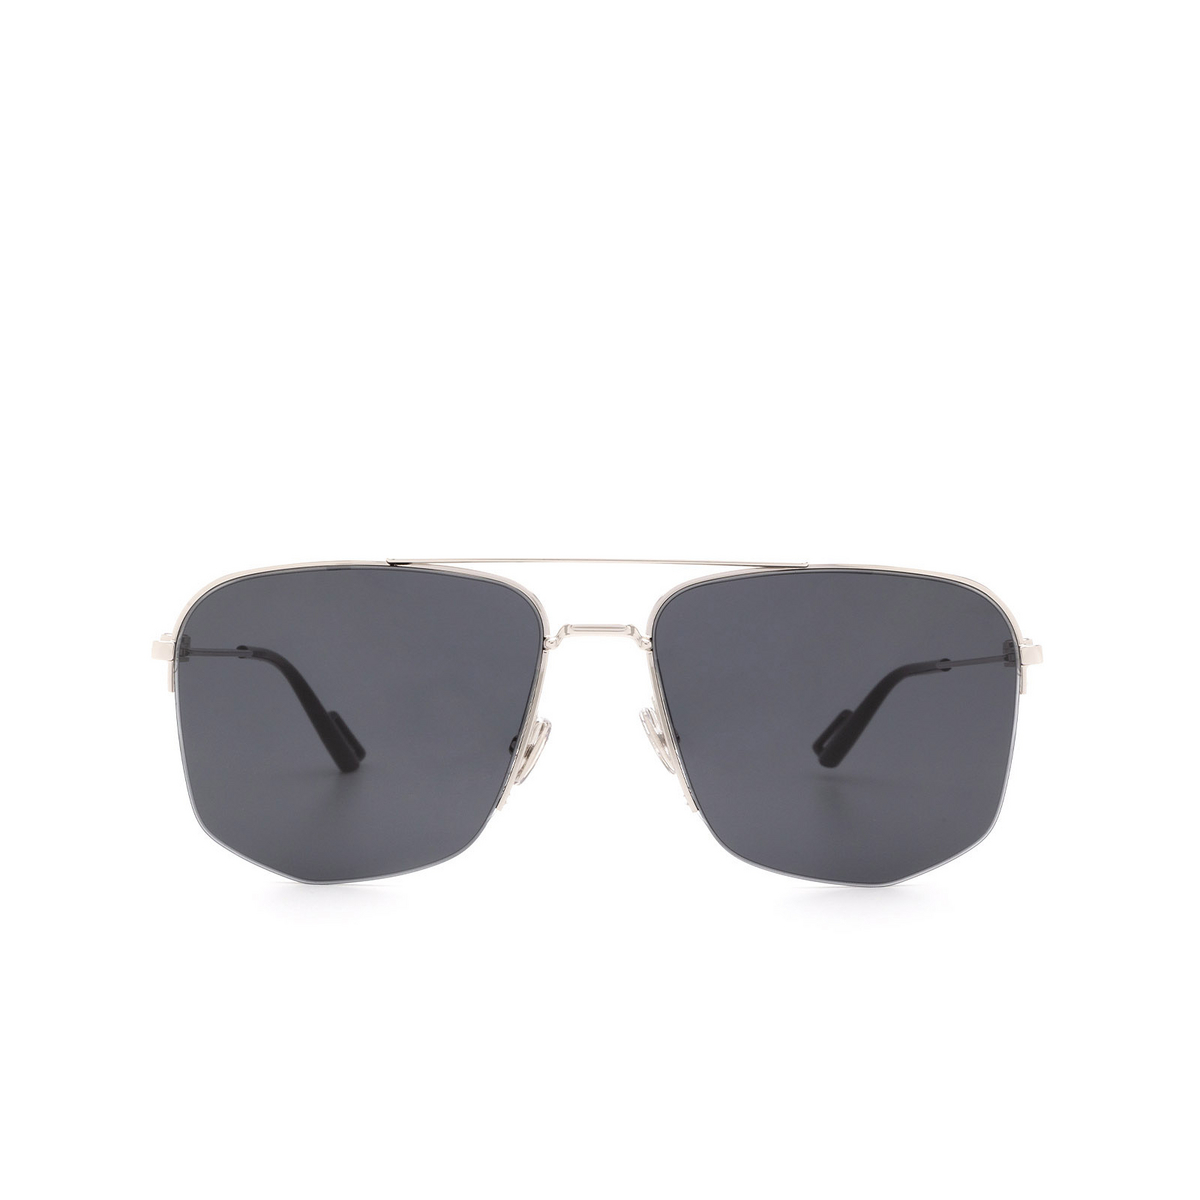 Dior® Aviator Sunglasses: DIOR180 color Palladium 84J/IR - front view.